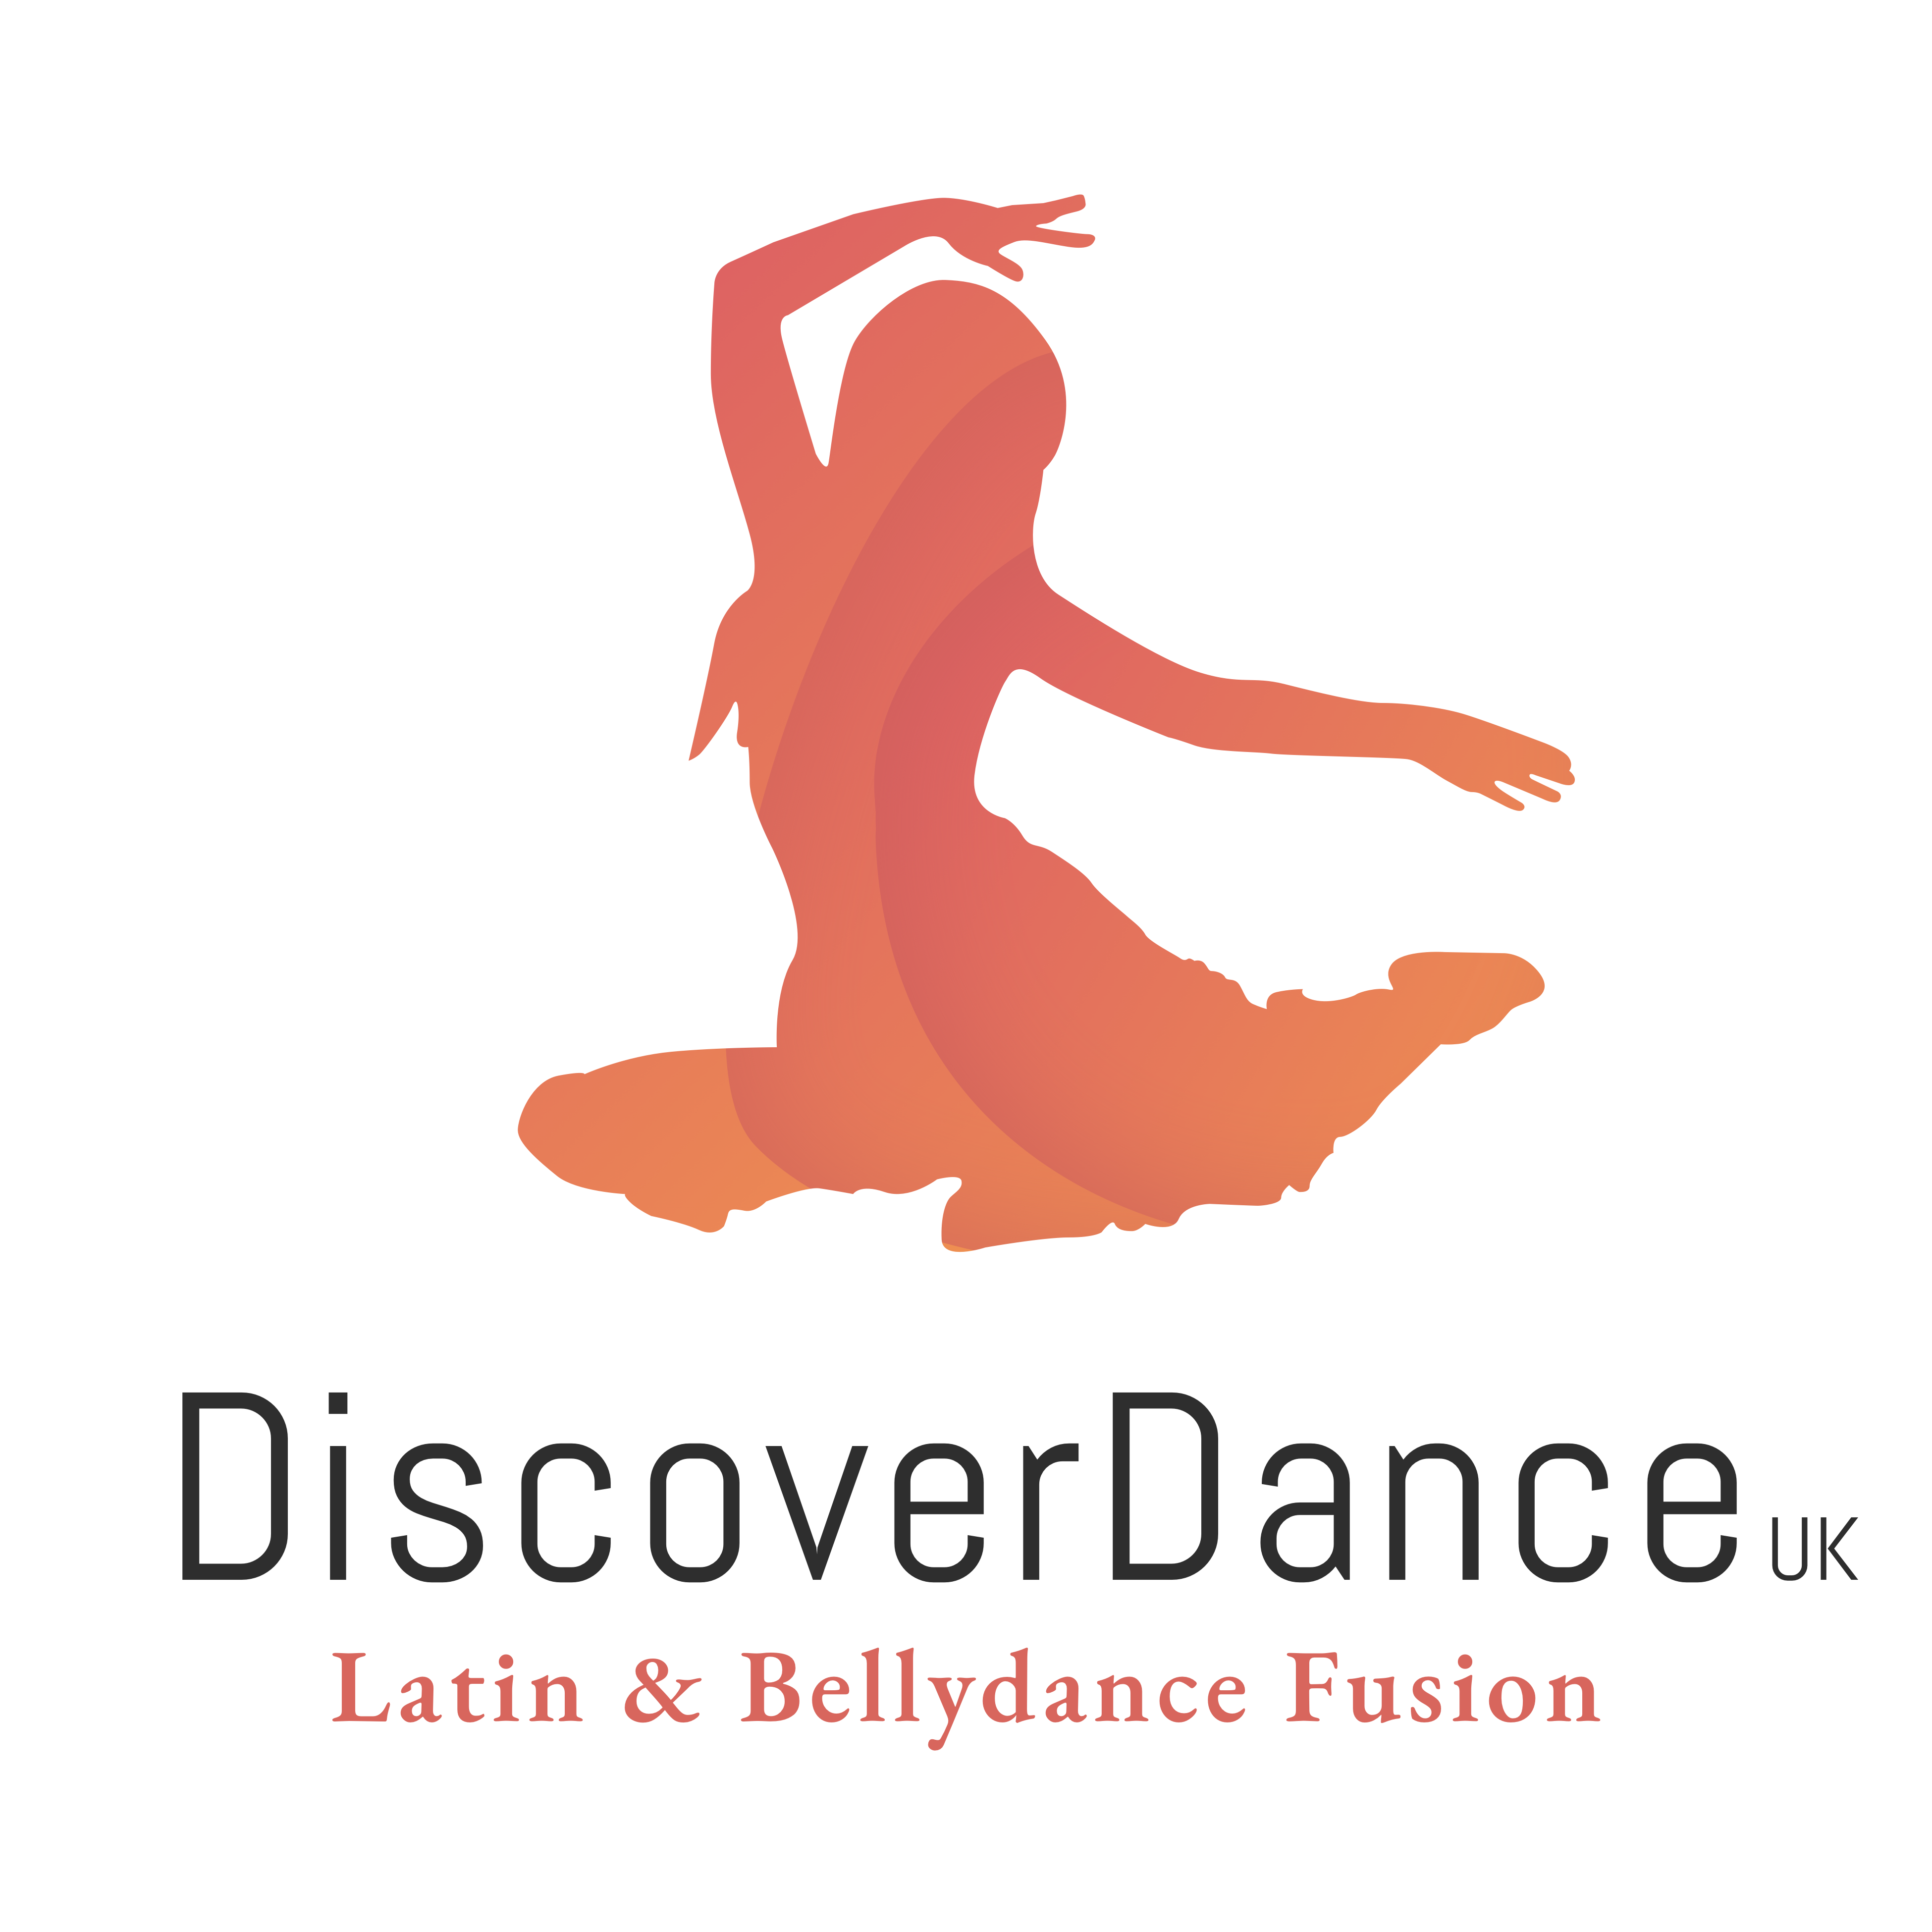 Discover Dance UK Logo